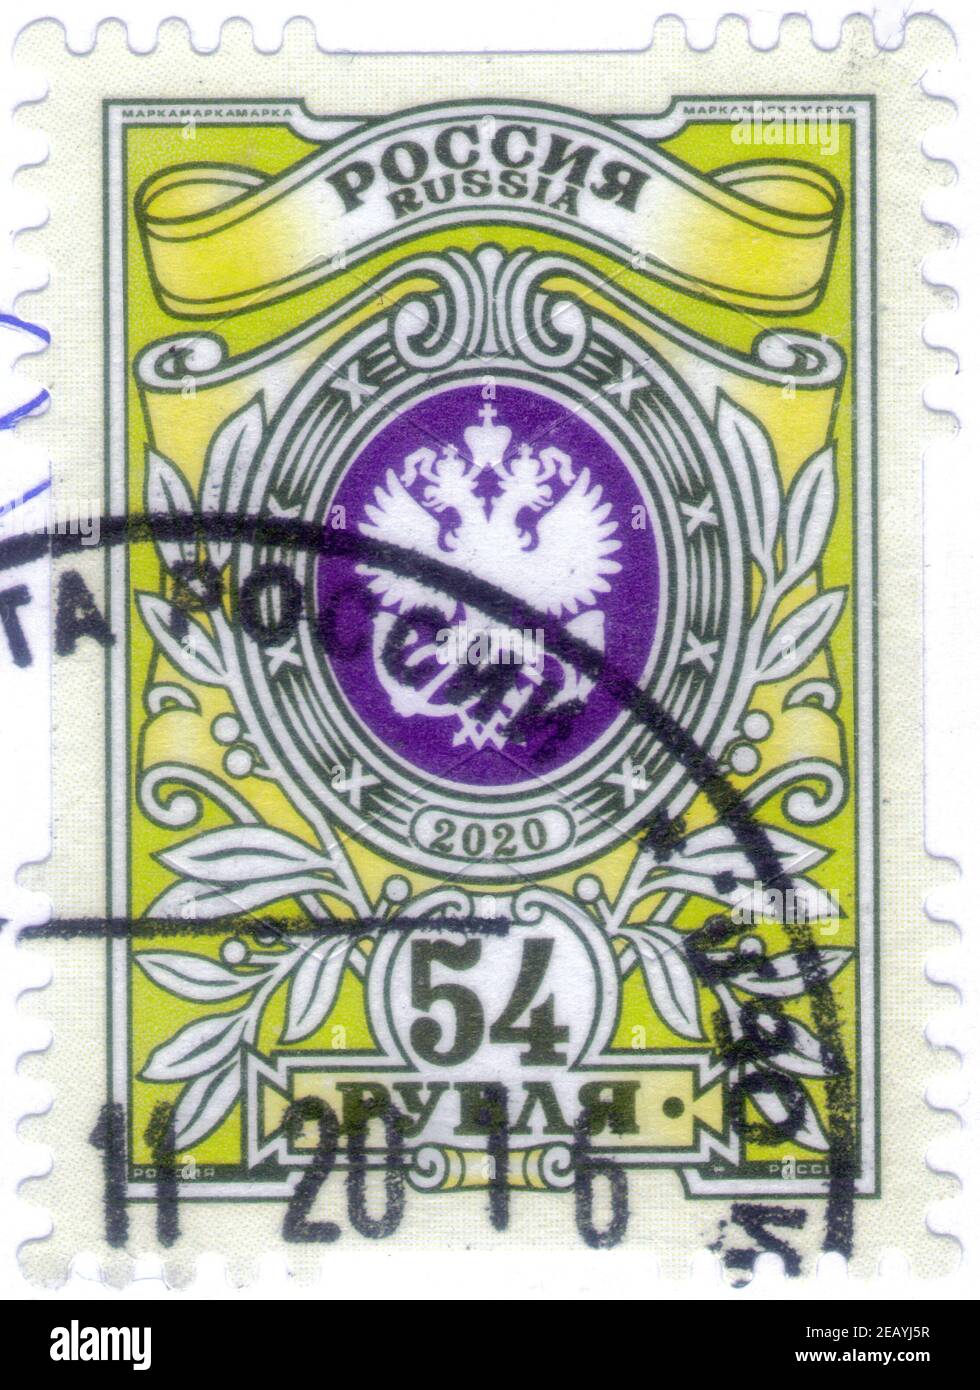 Sankt Petersburg, Russland - 05. Dezember 2020: Briefmarke gedruckt in Russland mit dem Bild des Staatswappens, um 2020 Stockfoto